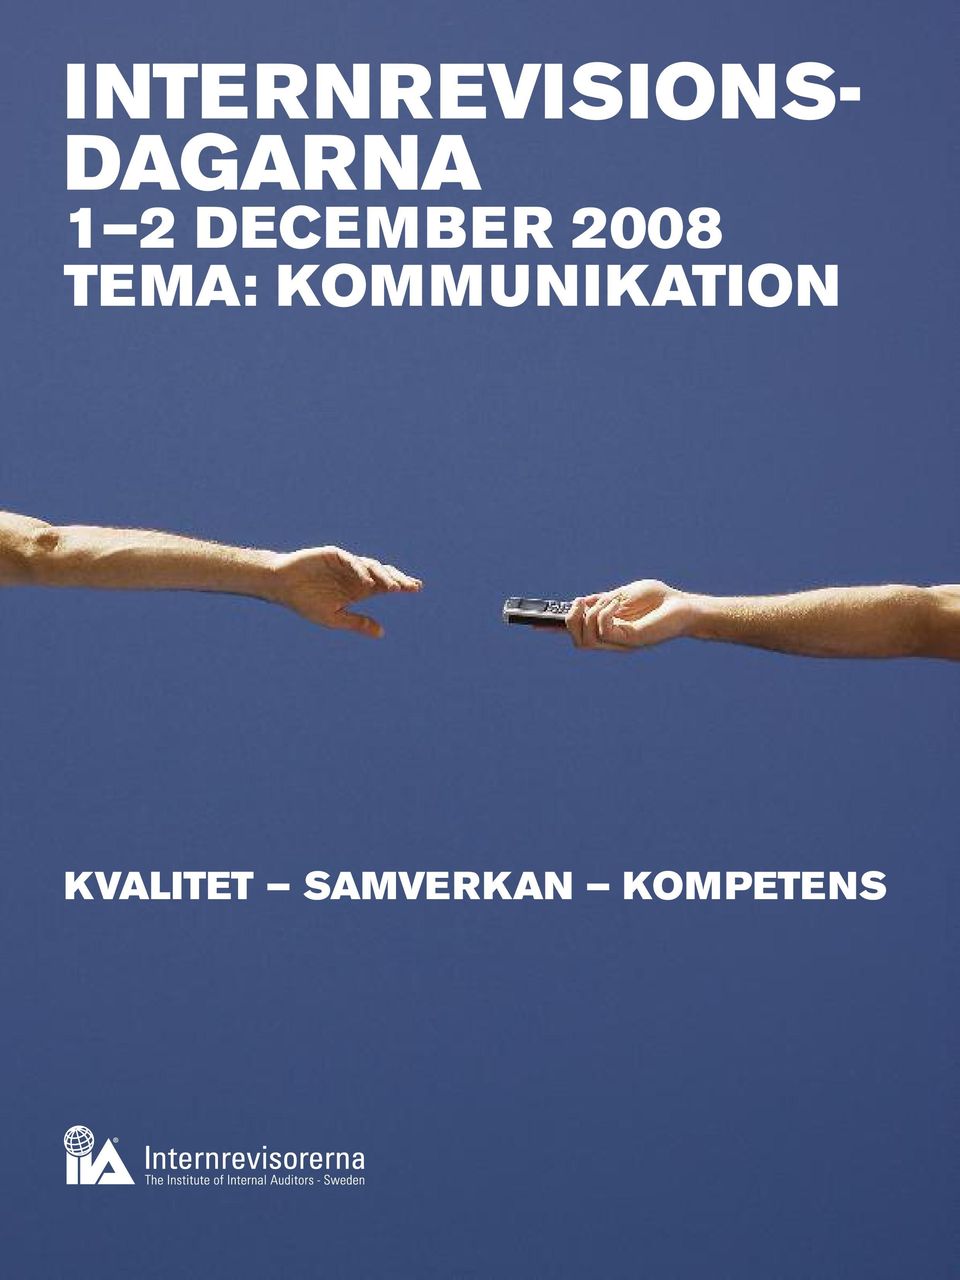 2008 TEMA: